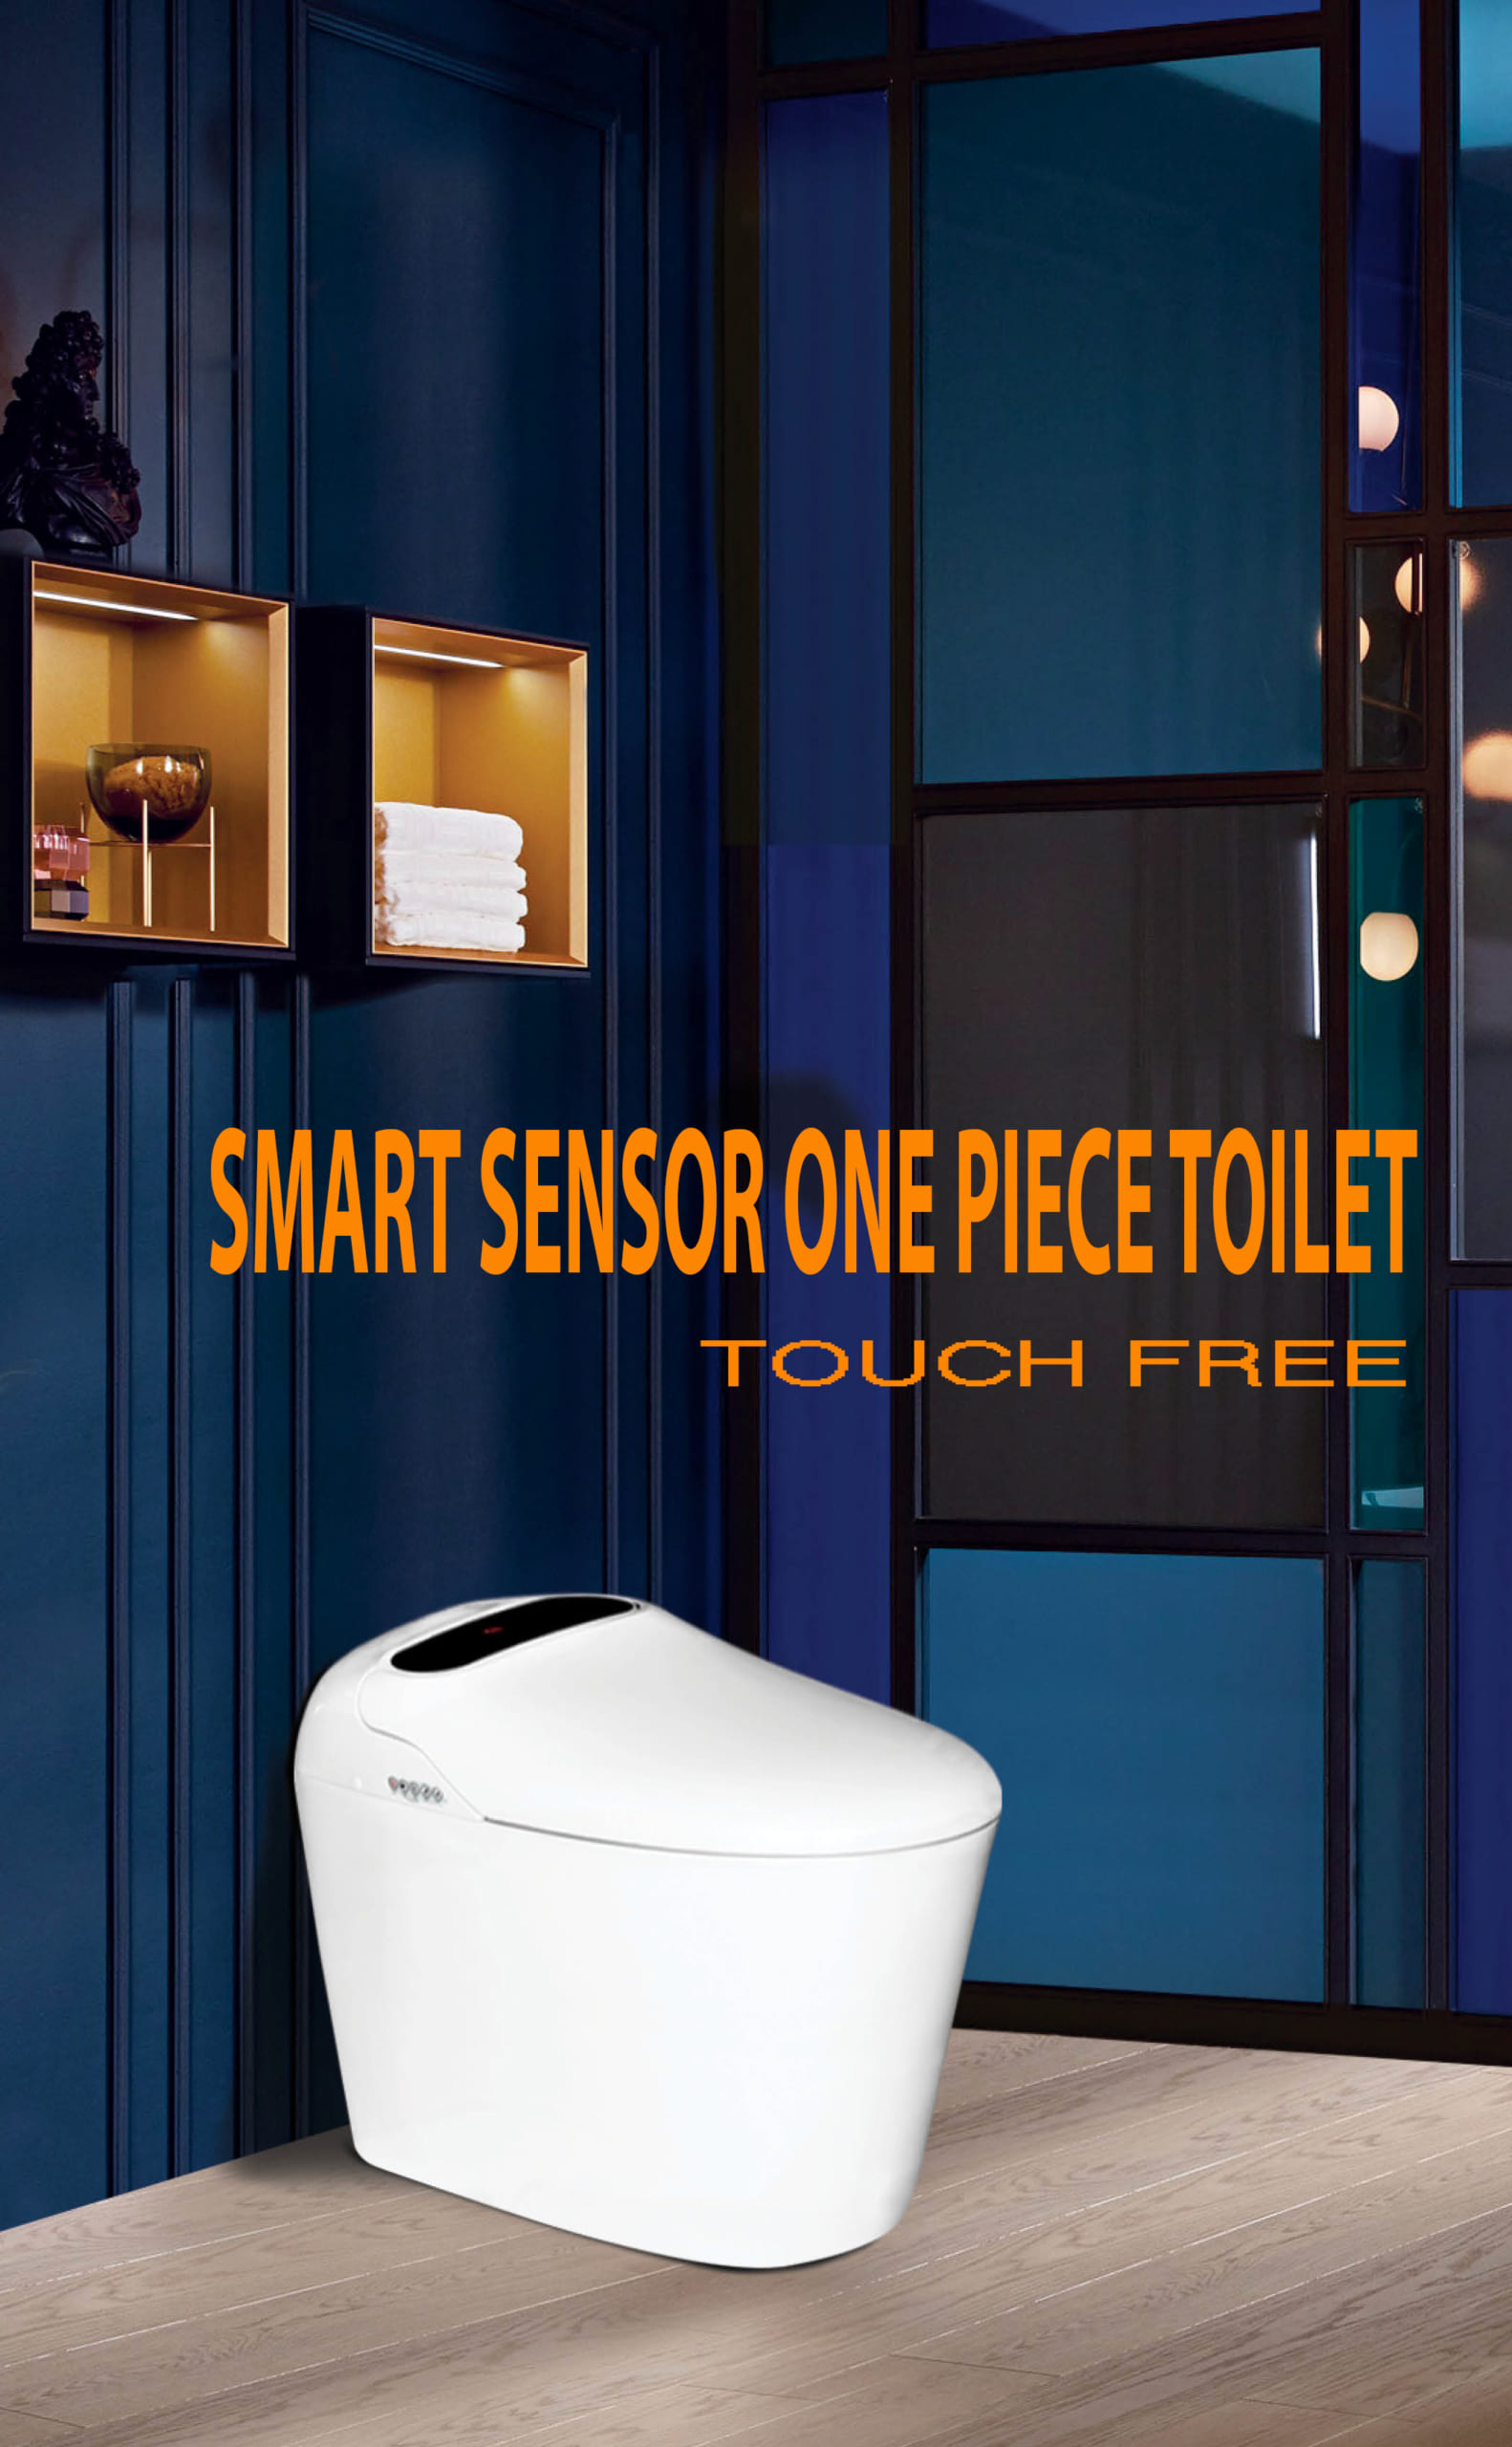 Touch free toilet vietnam